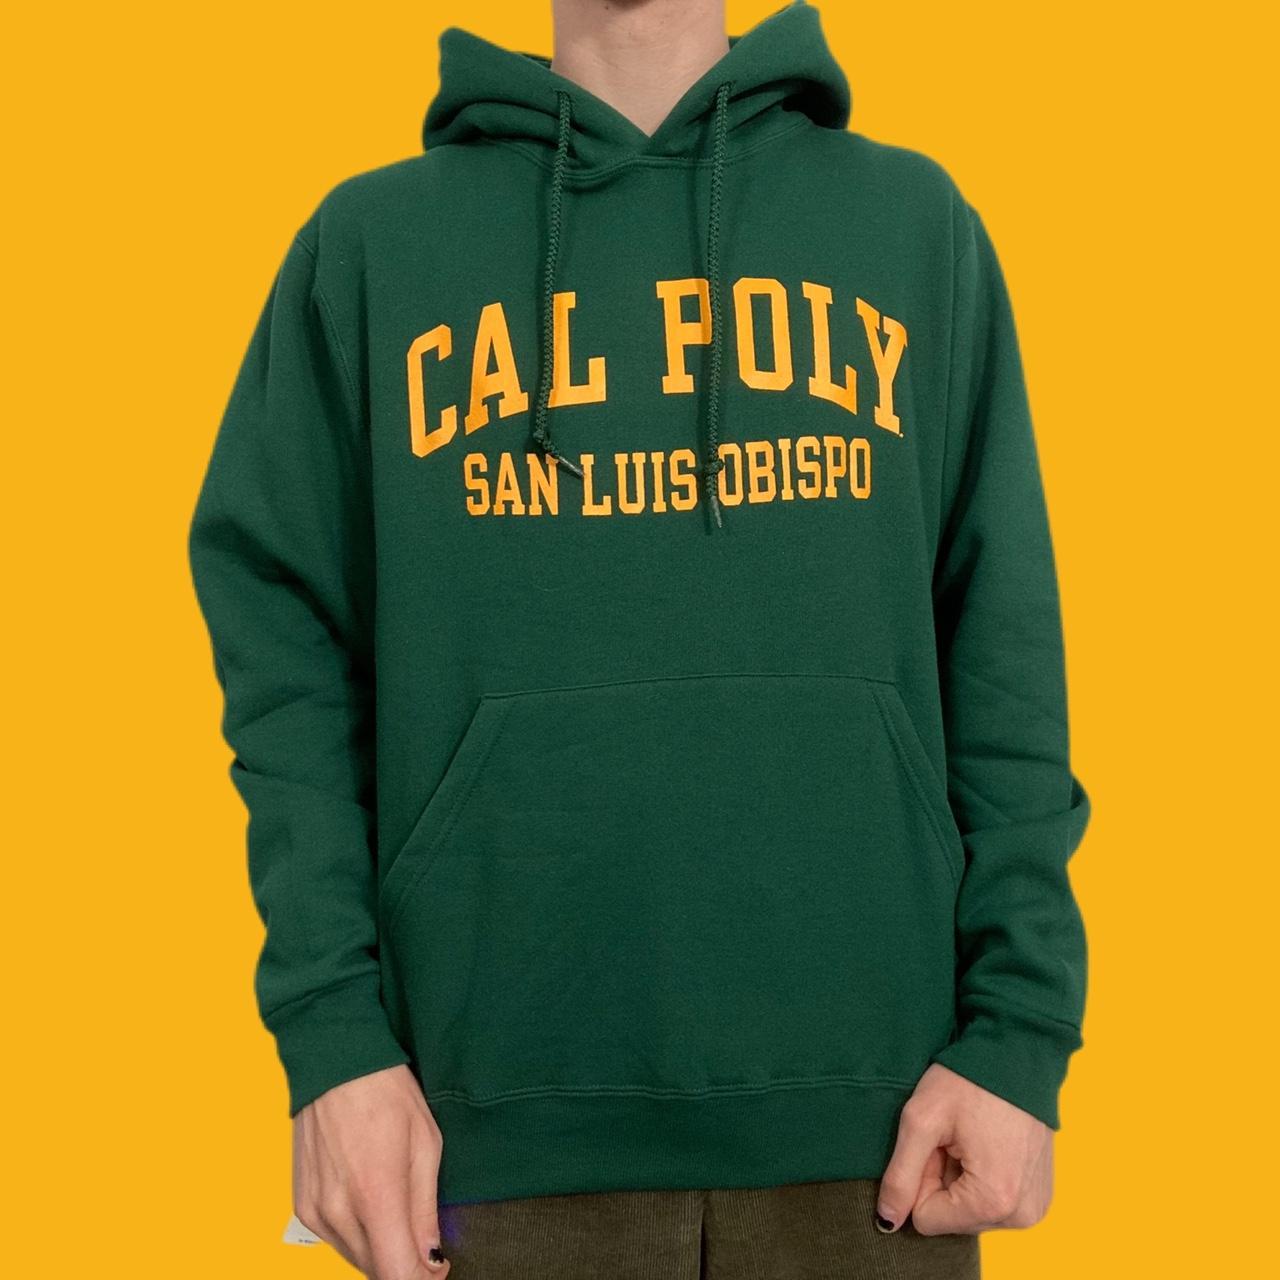 Champion Cal Poly San Louis Obispo Hoodie Adult S Sweatshirt Green Letterman